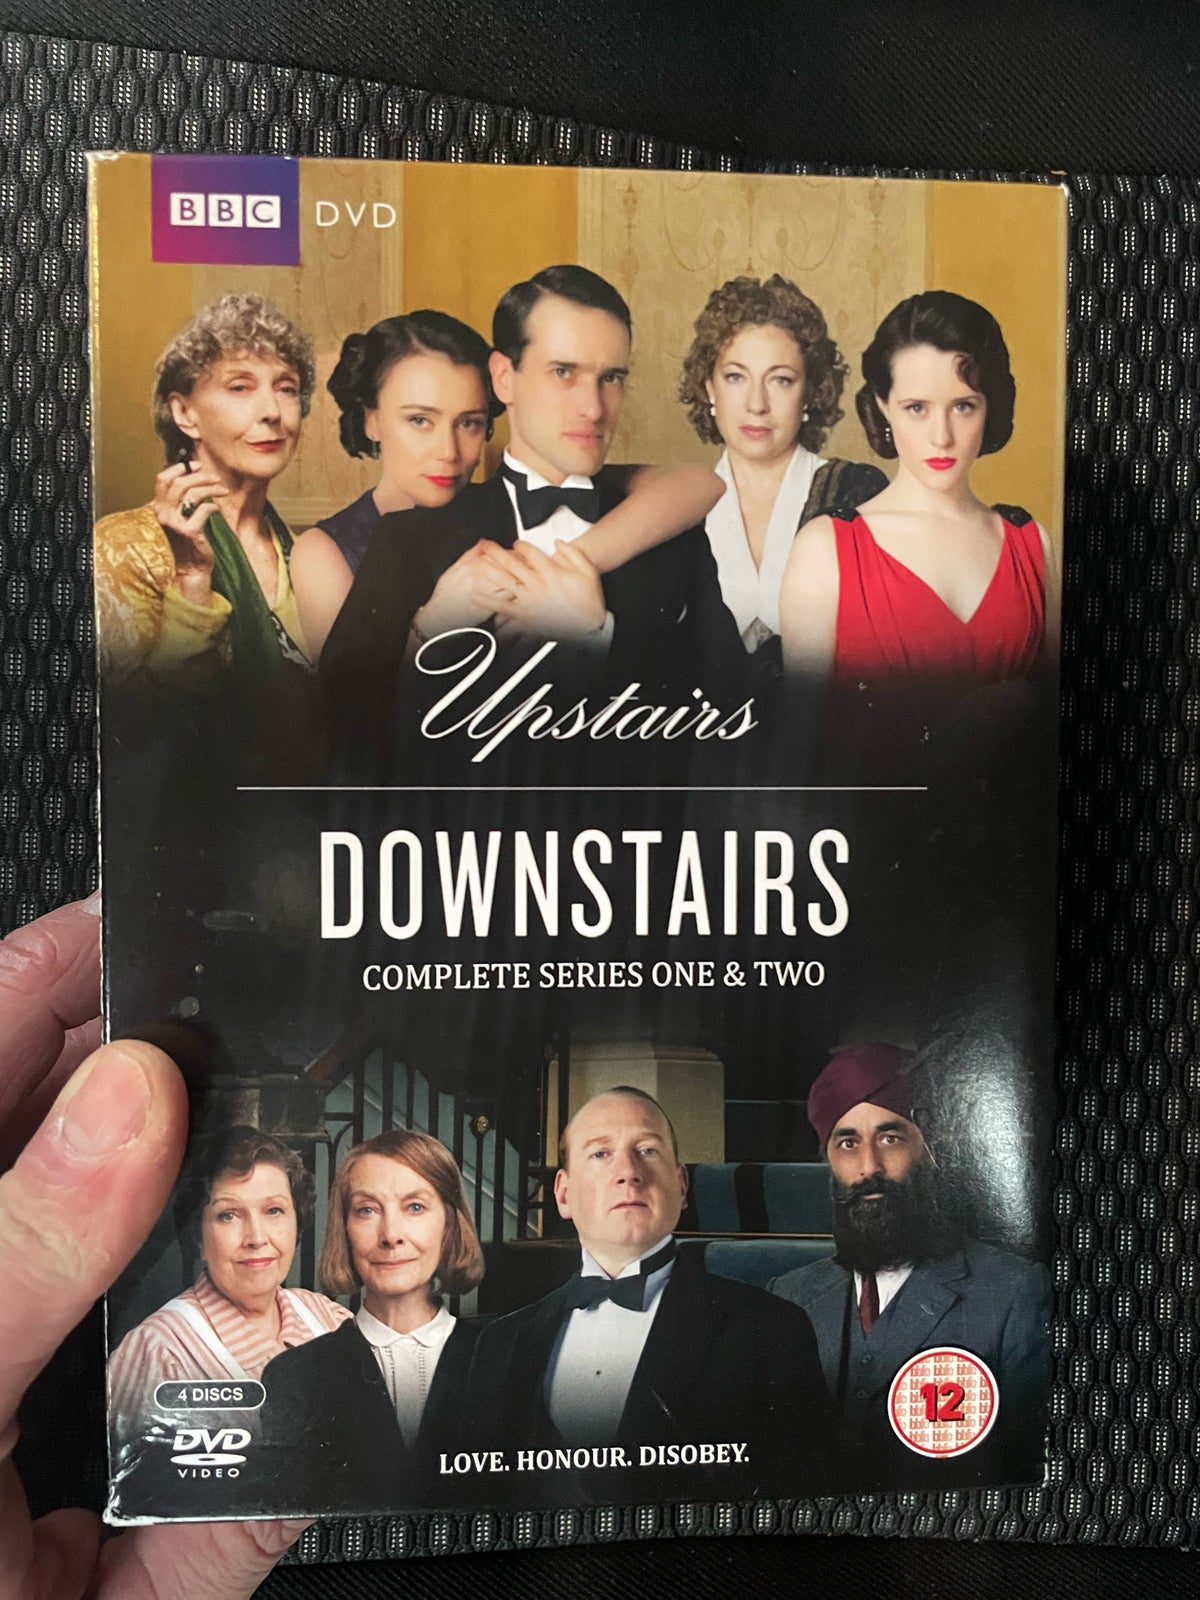 Upstairs Downstairs, DVD, drama